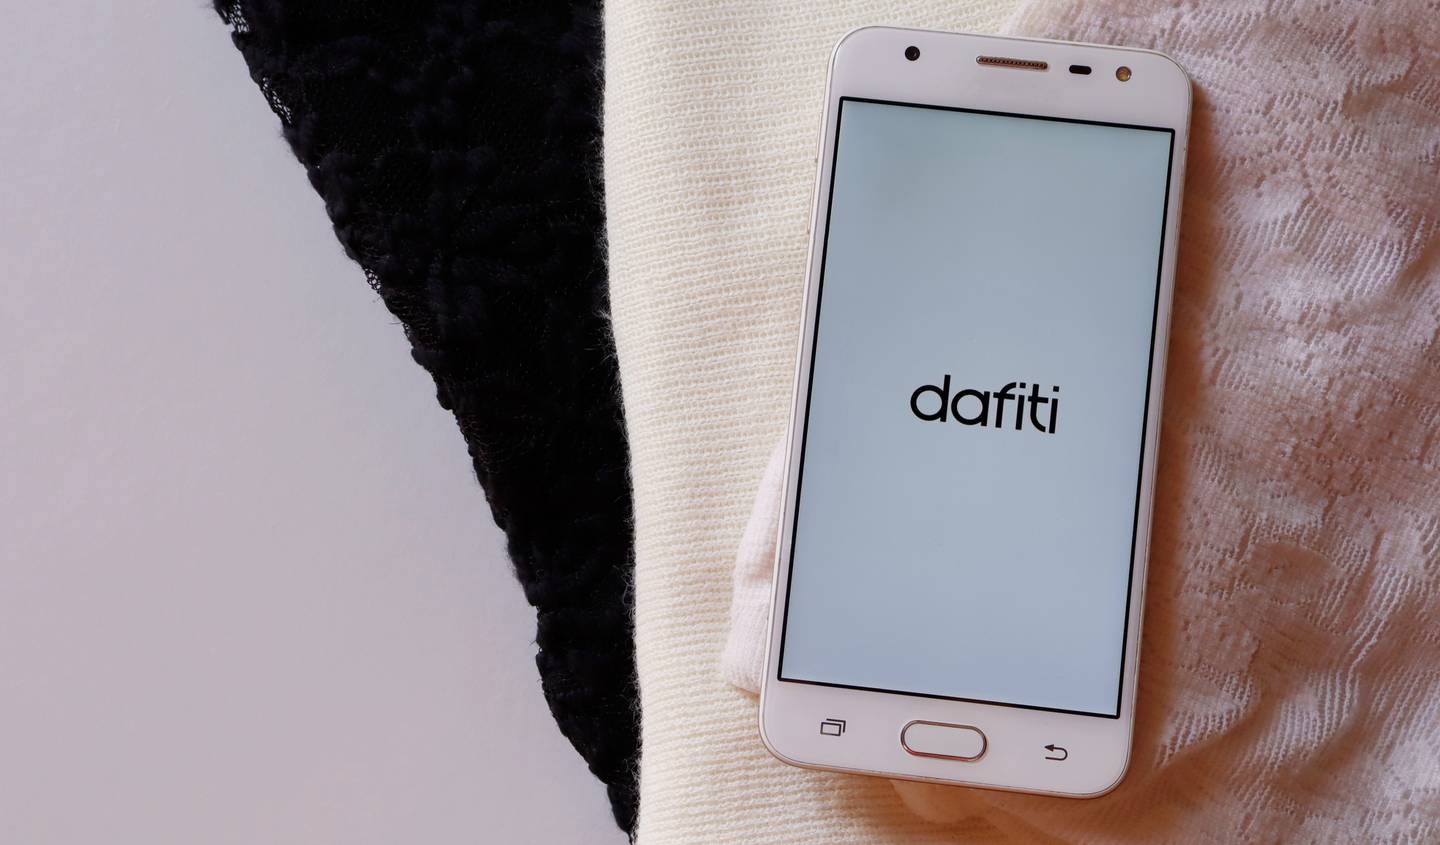 Brazilian fashion company Dafiti app. Shutterstock.